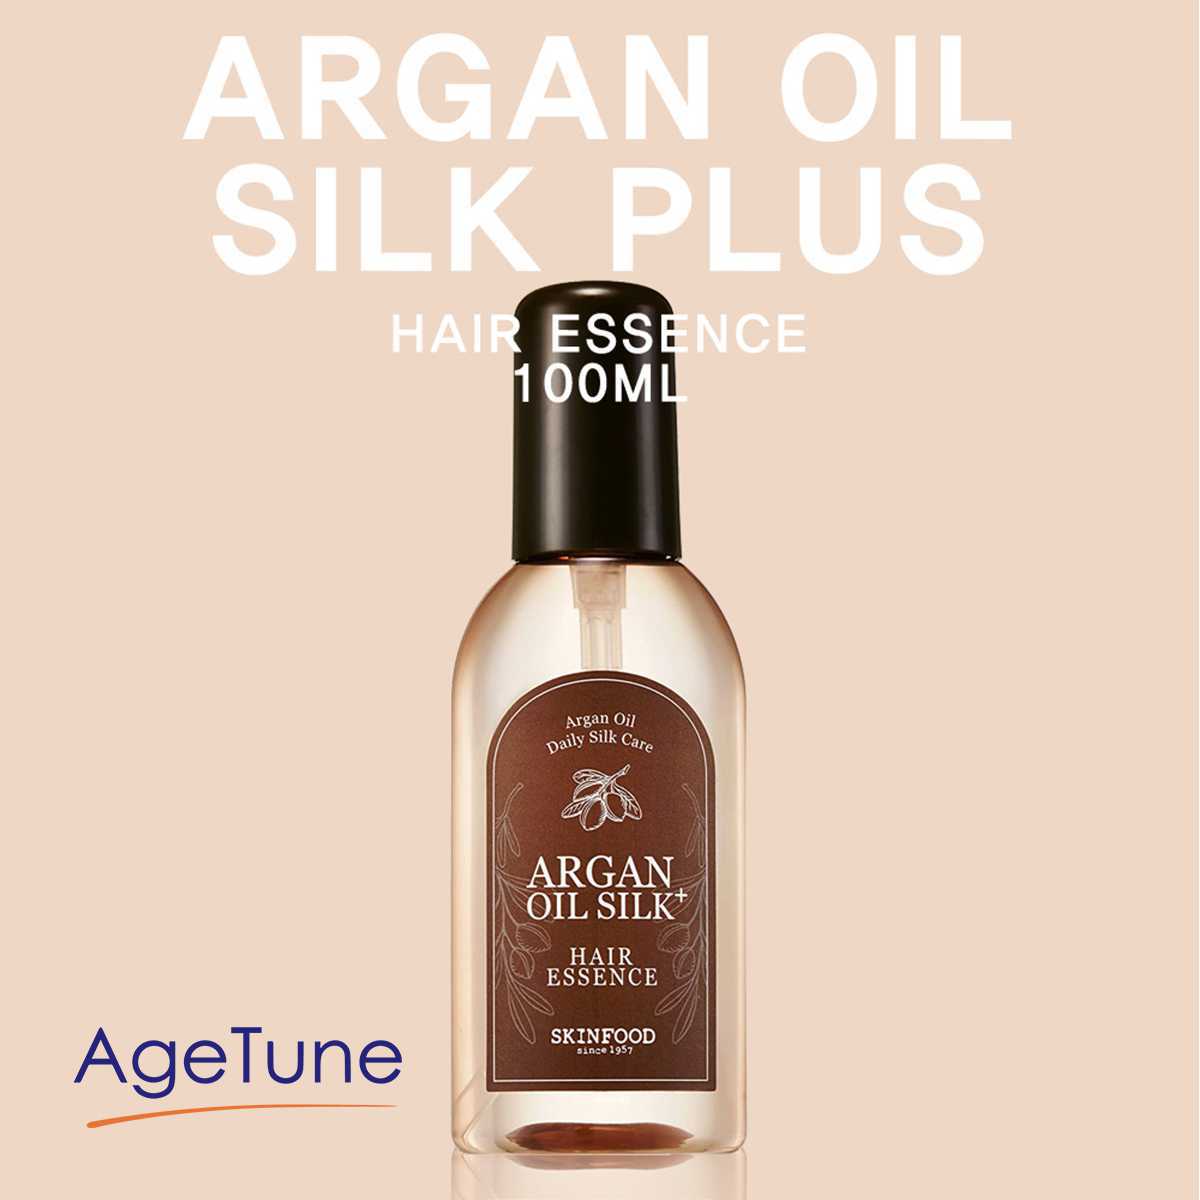 SKINFOOD Argan Oil Silk Plus Hair Essence